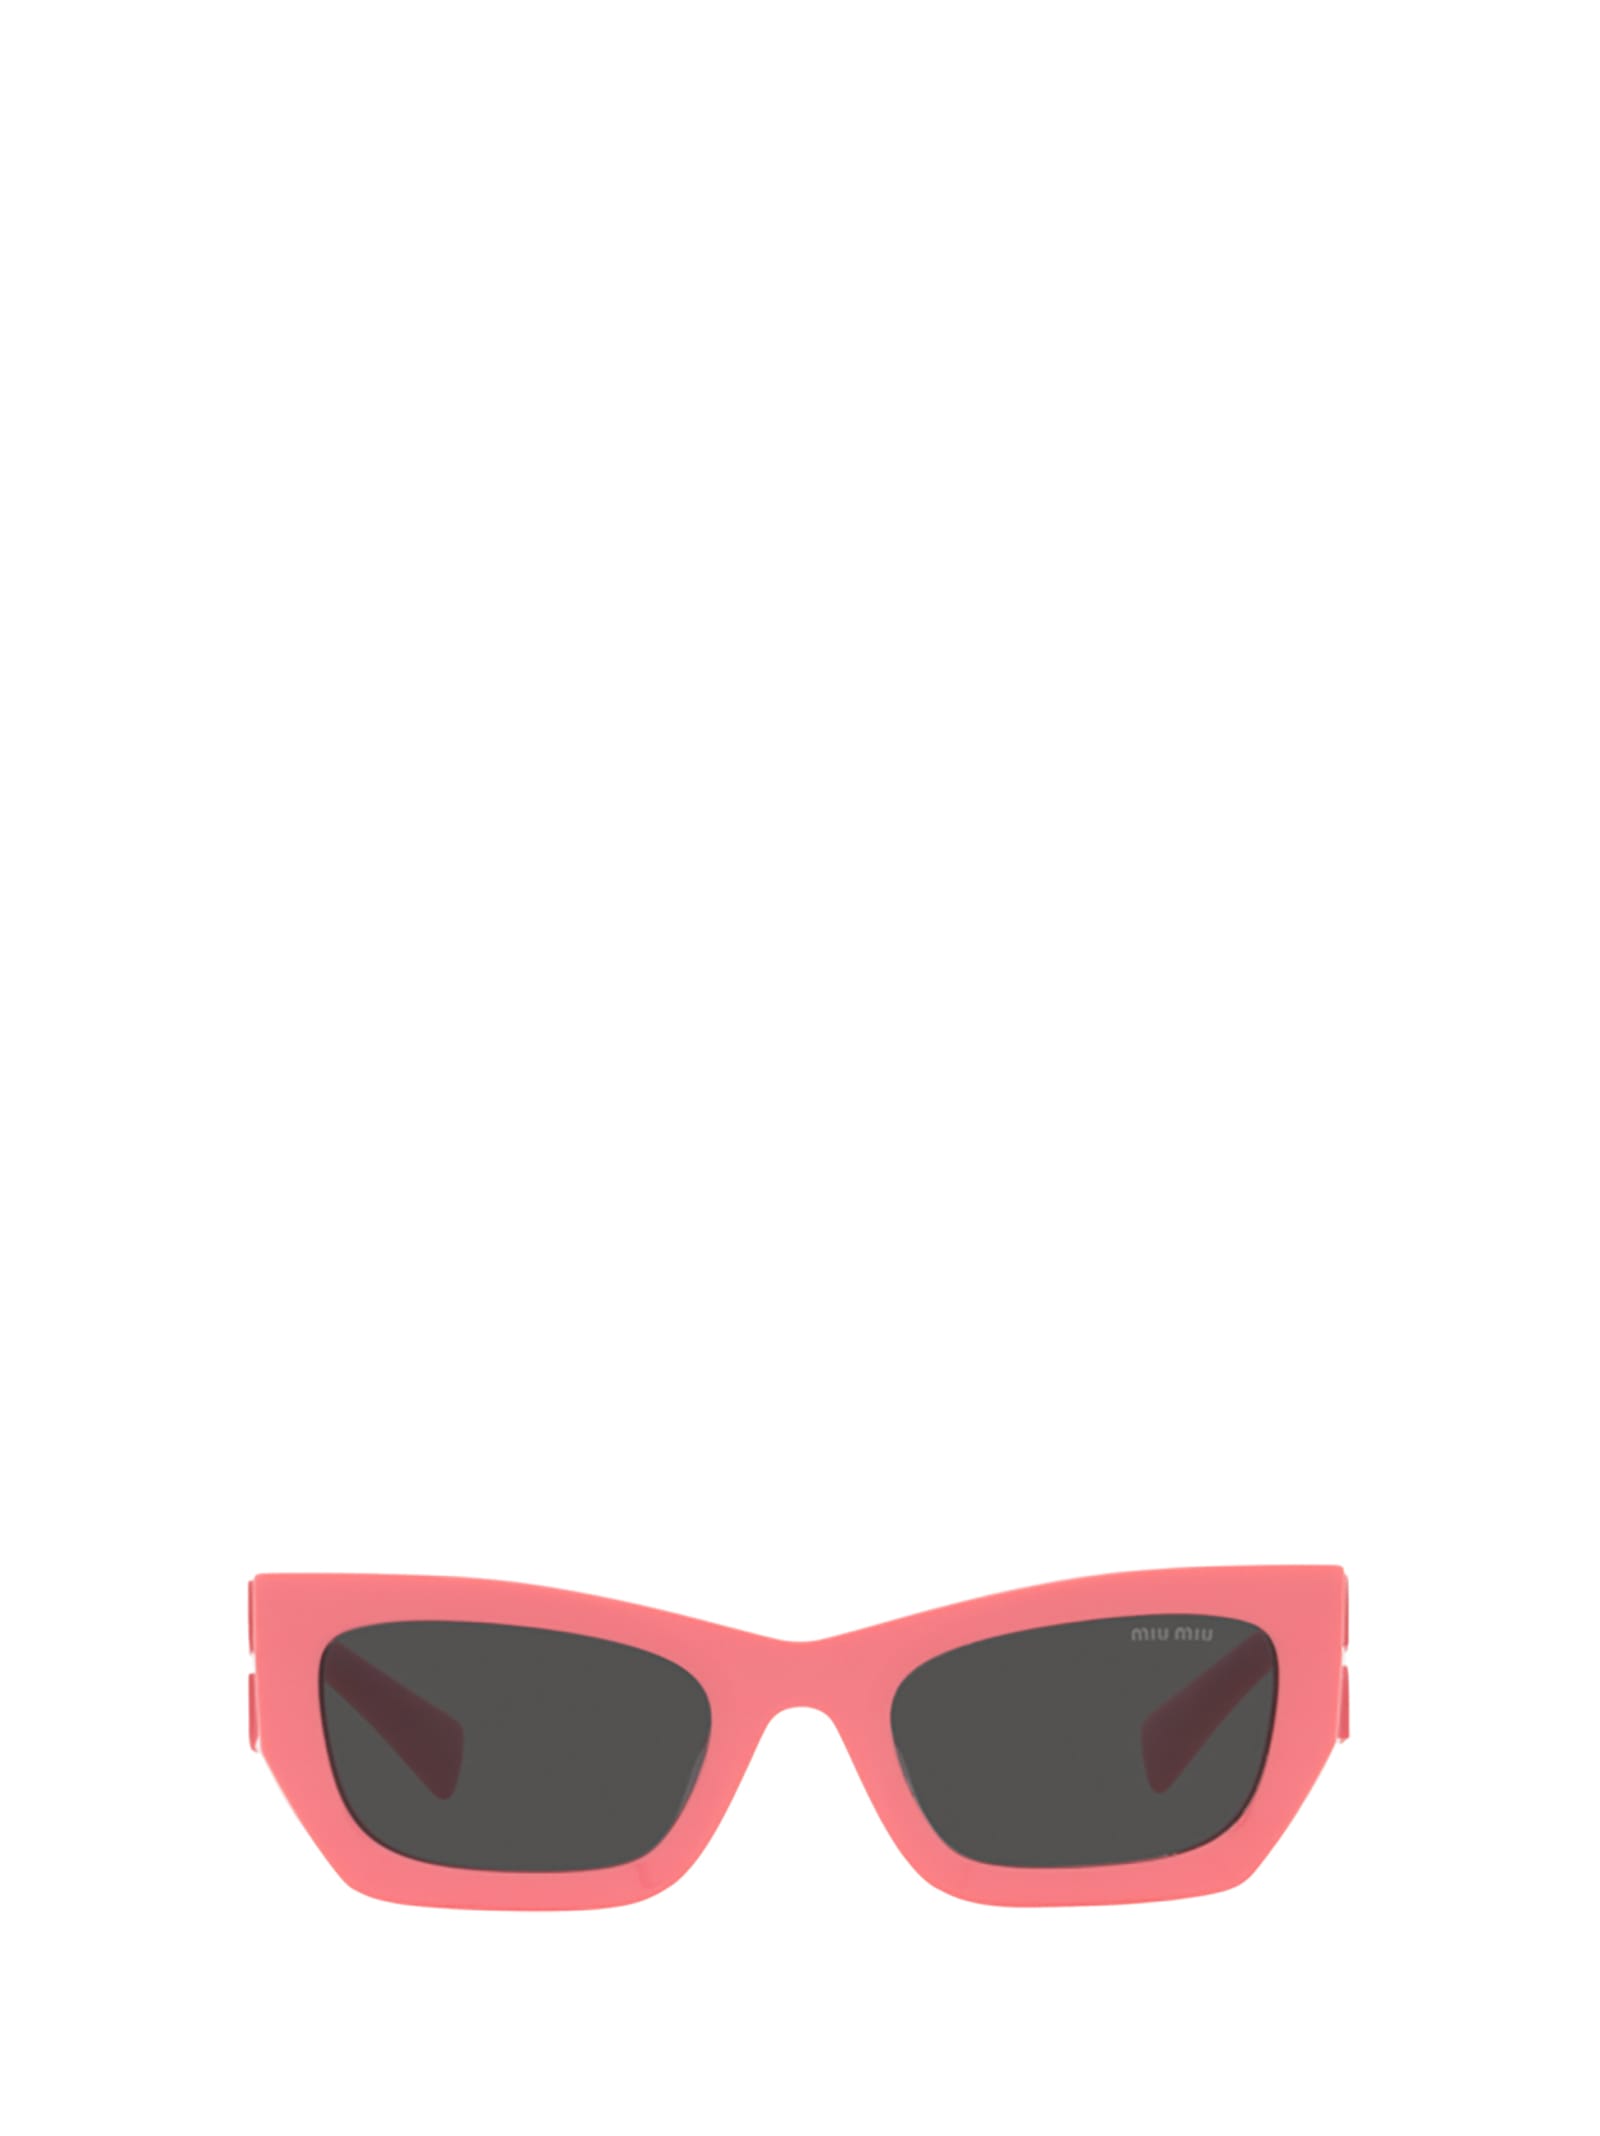 Miu Miu Mu 09ws Dark Pink Sunglasses